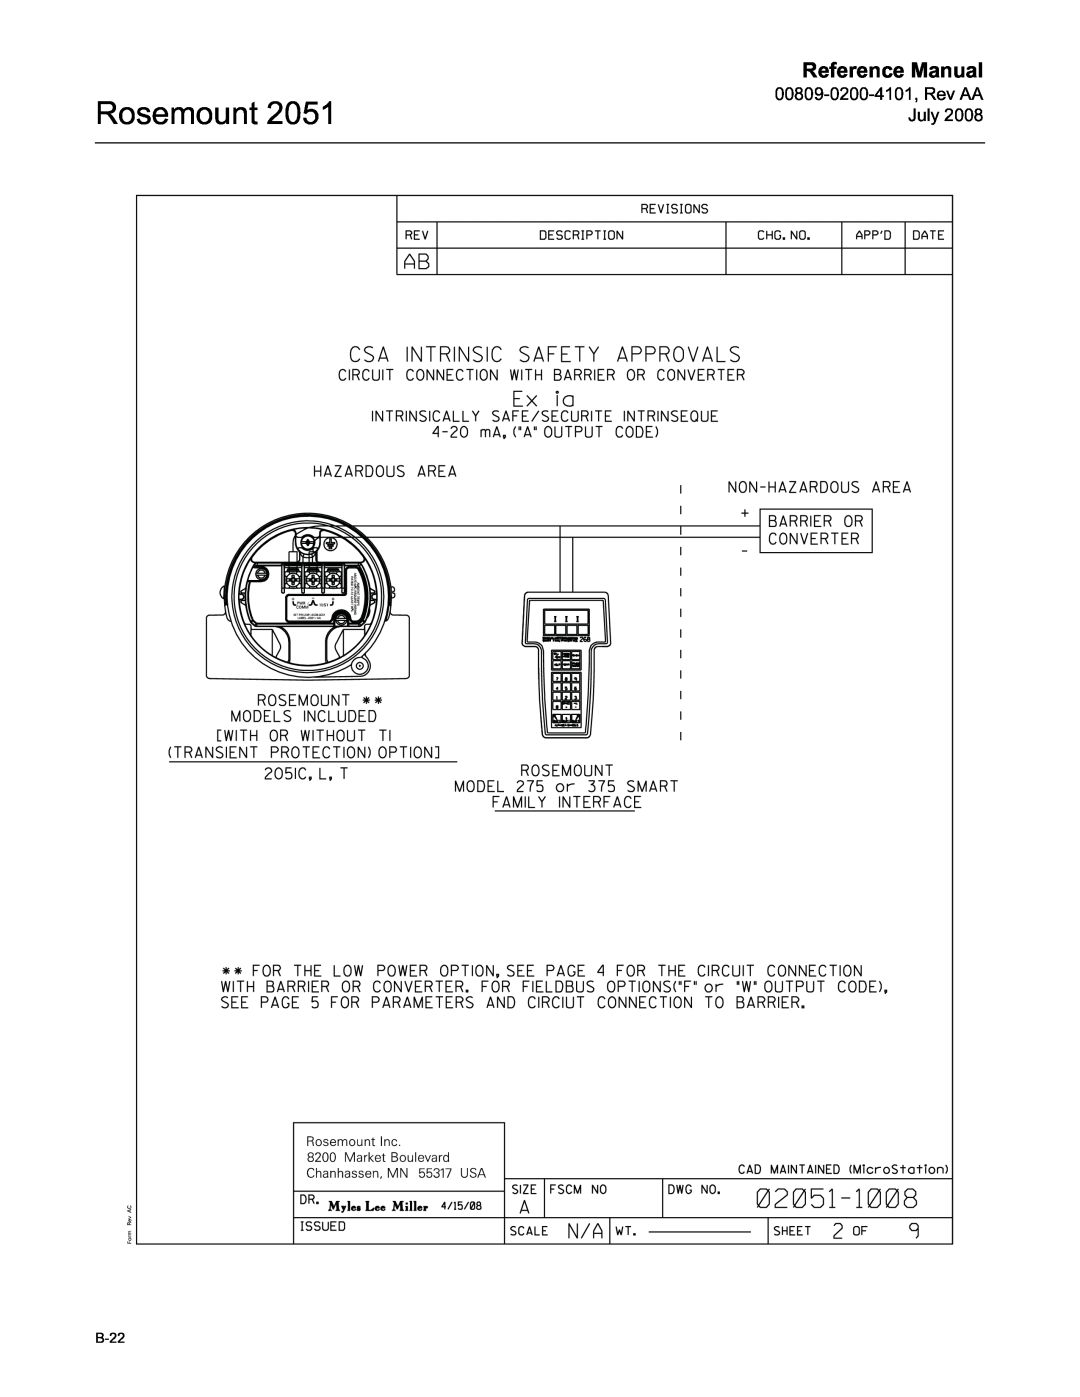 Emerson Process Management 2051 manual Rosemount, Reference Manual, B-22 